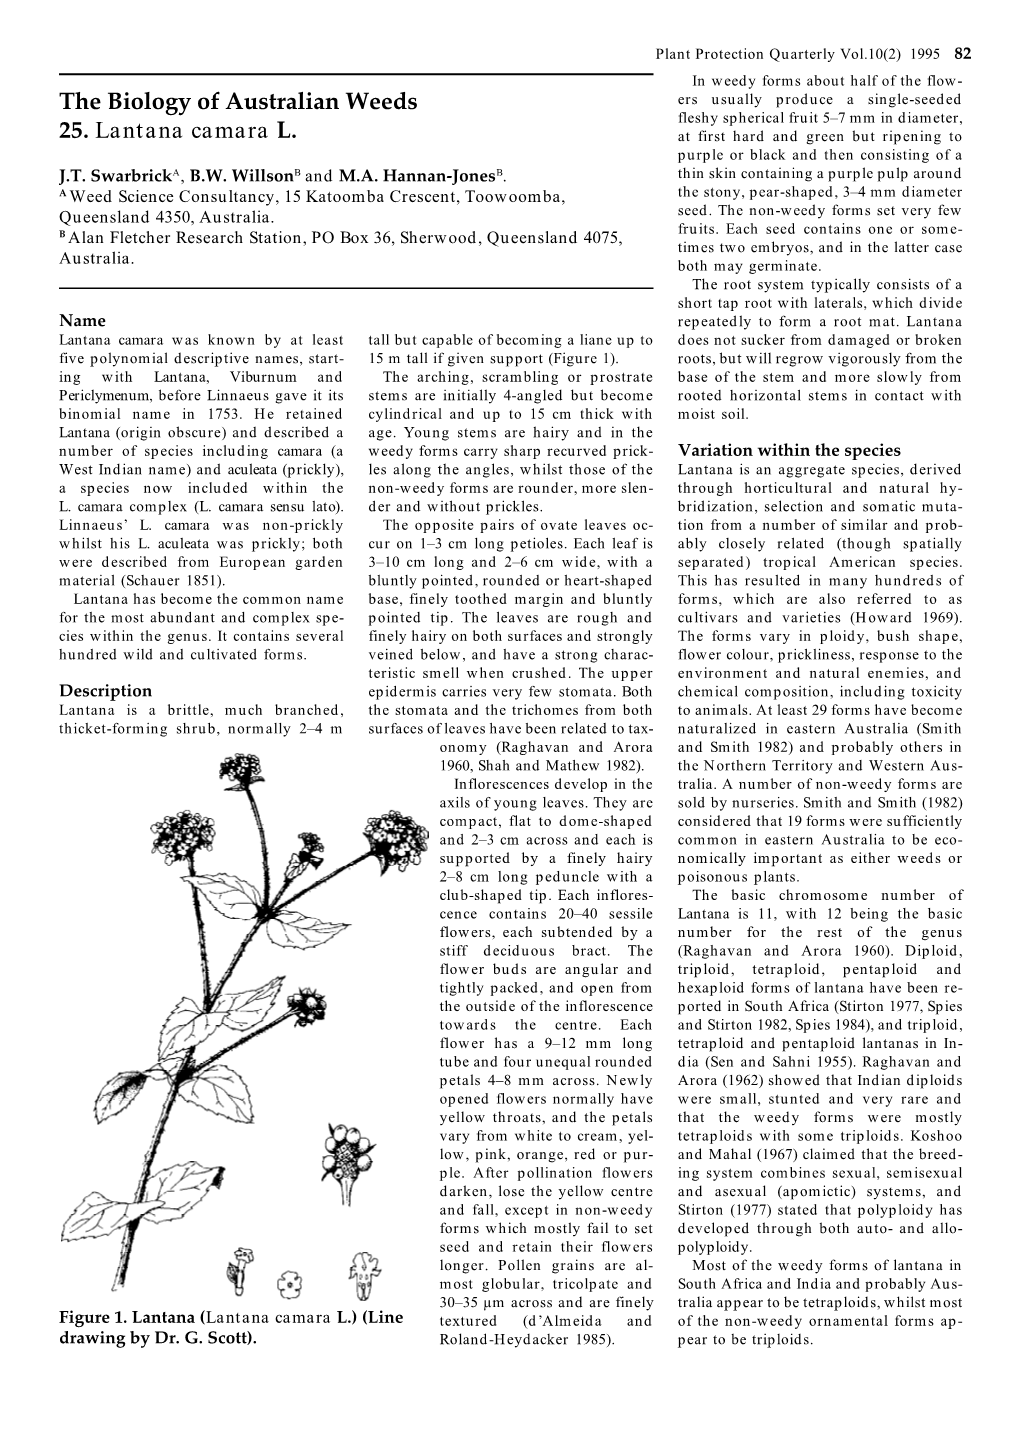 The Biology of Australian Weeds 25. Lantana Camara L